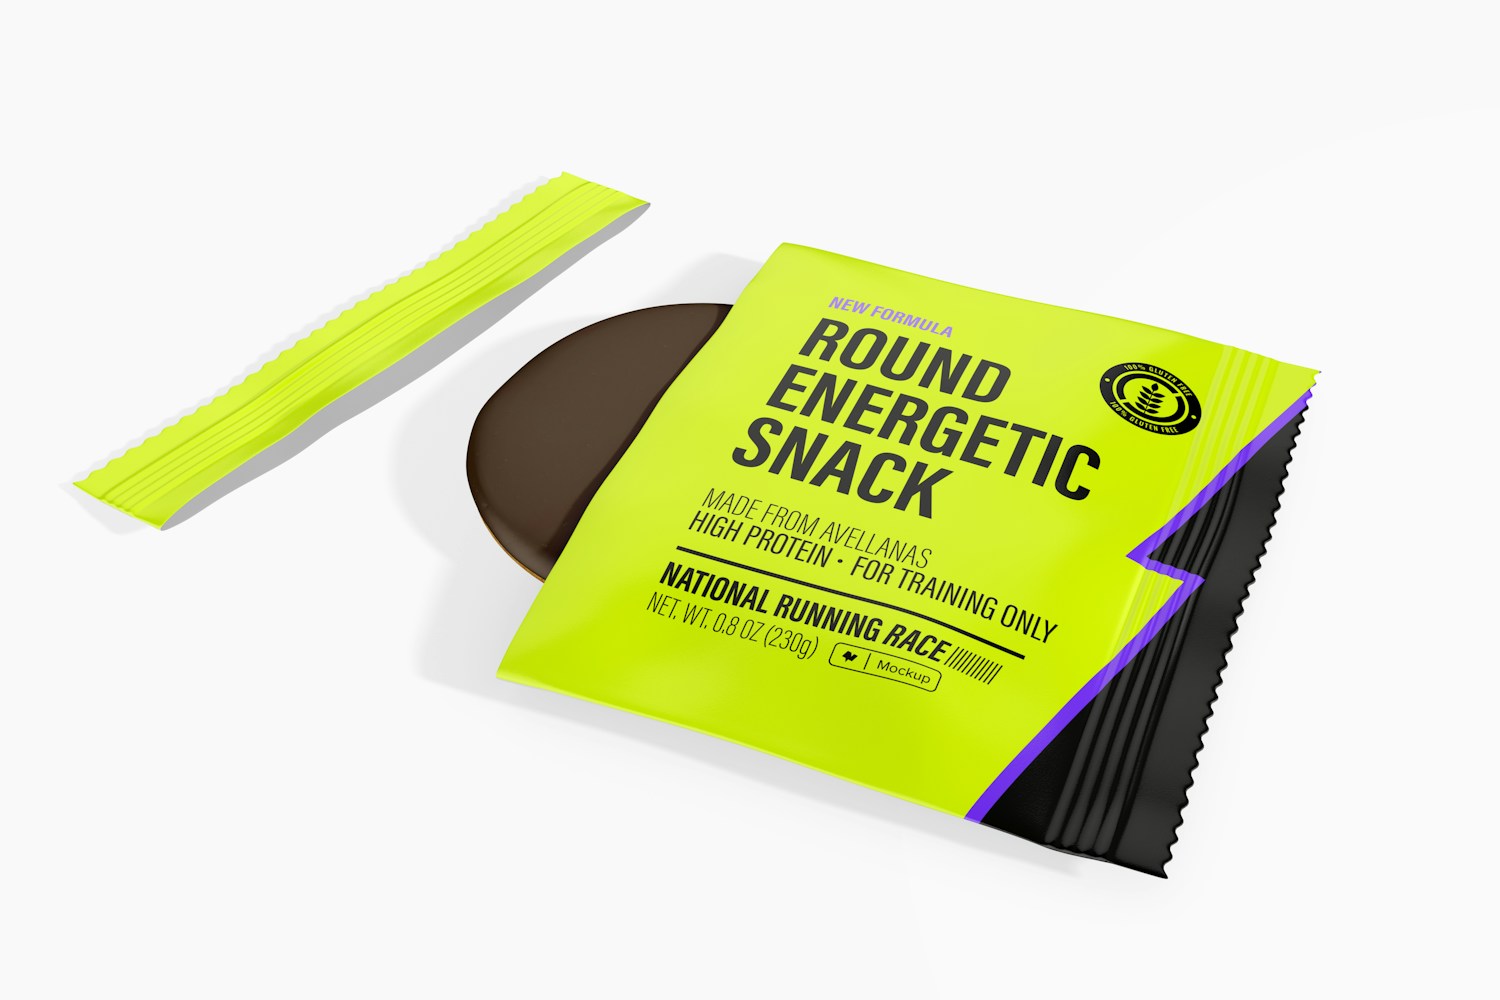 Round Energetic Snack Packaging Mockup, Perspective